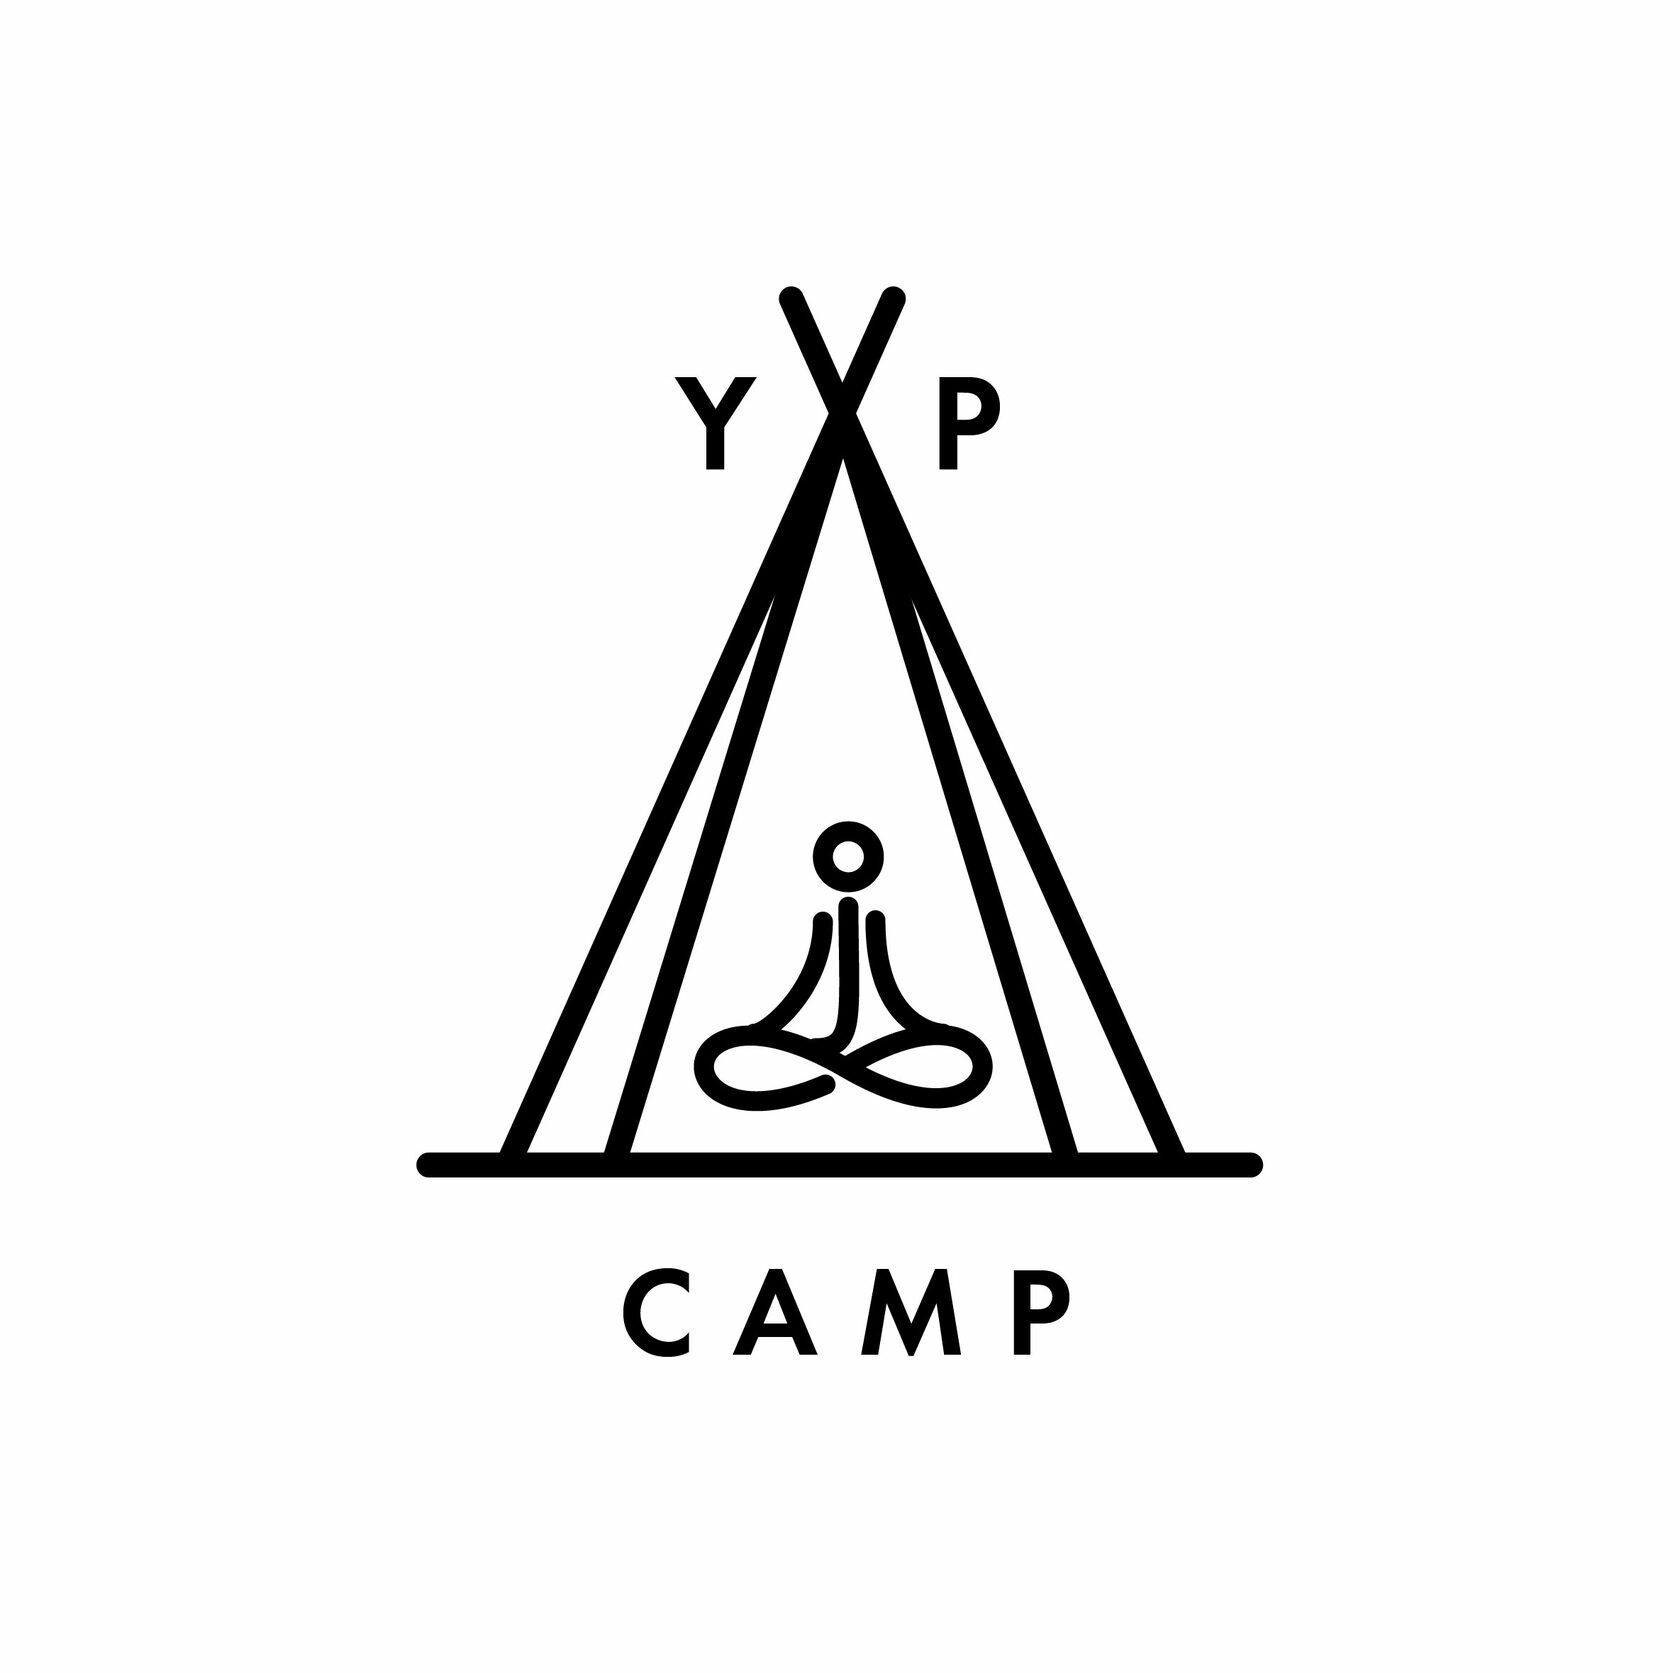 YP CAMP